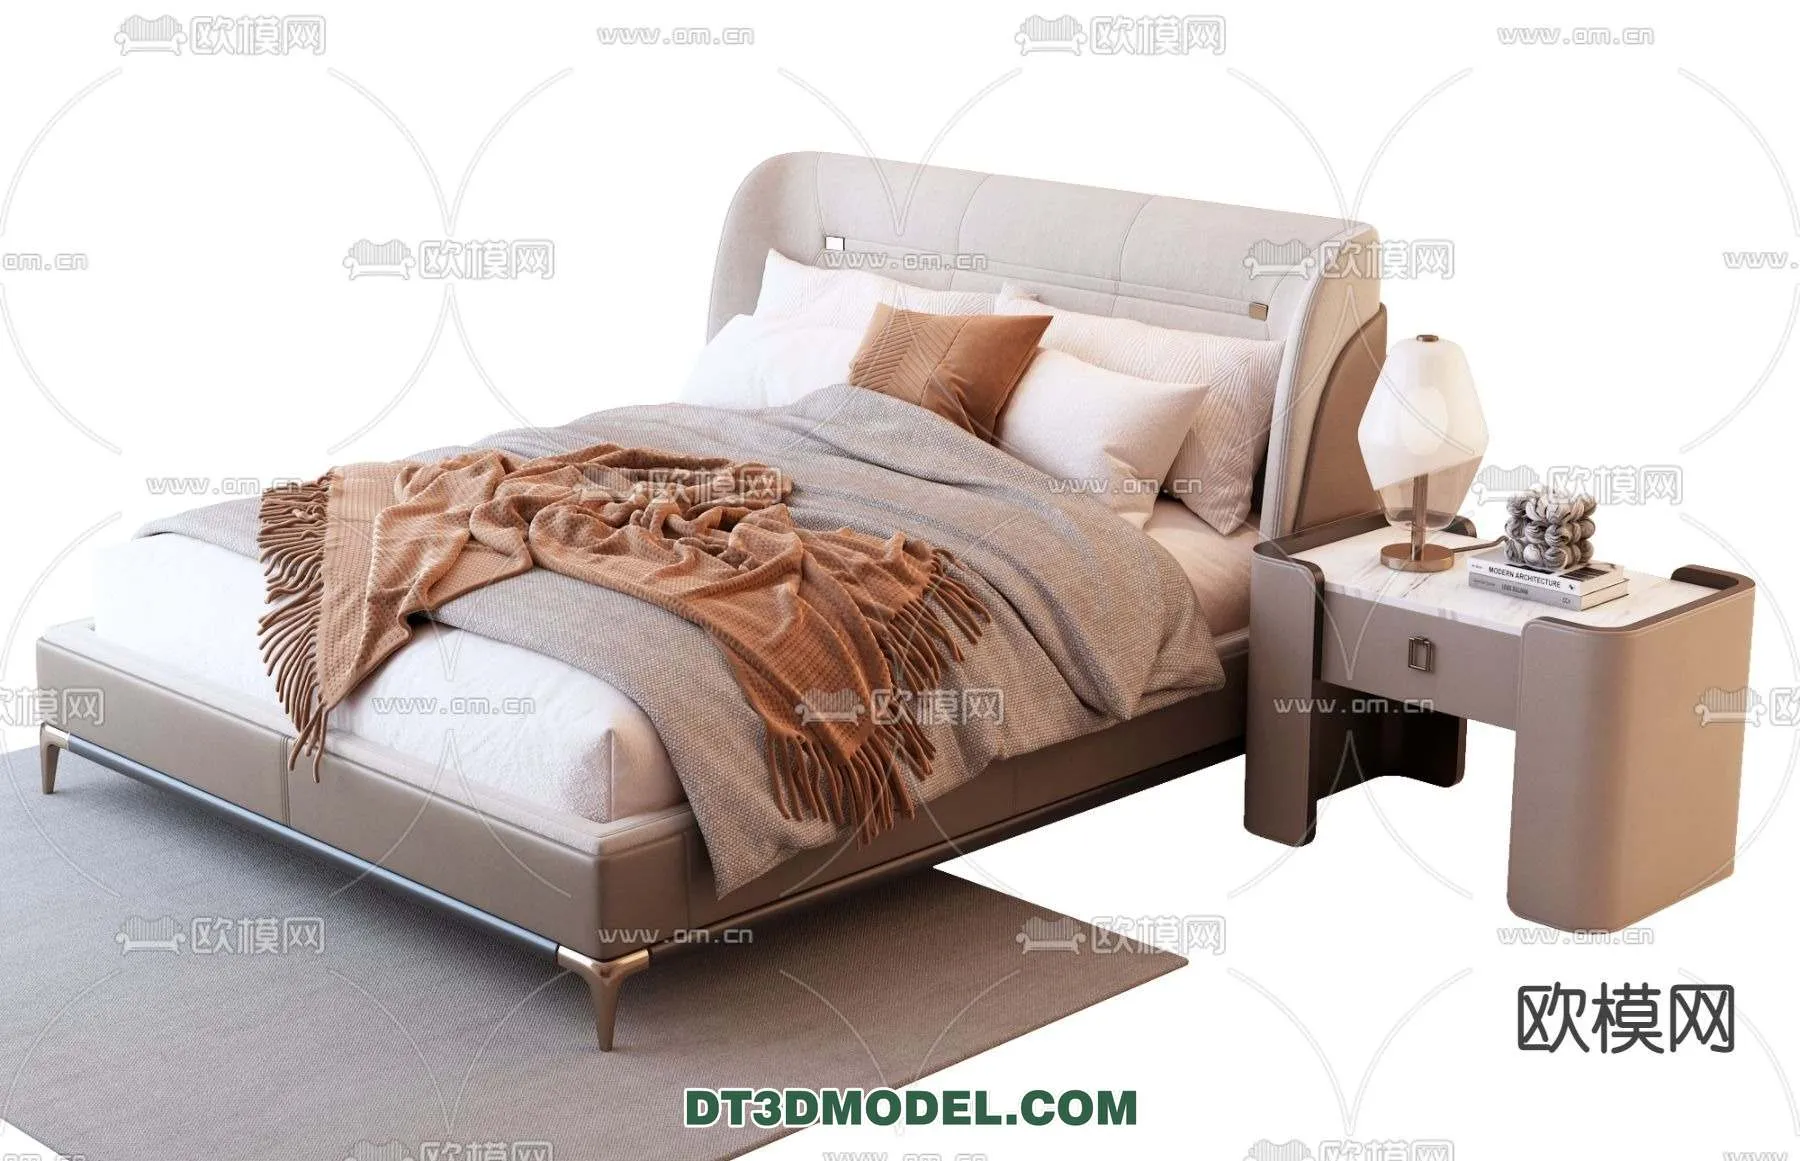 Double Bed 3D Models – 0063